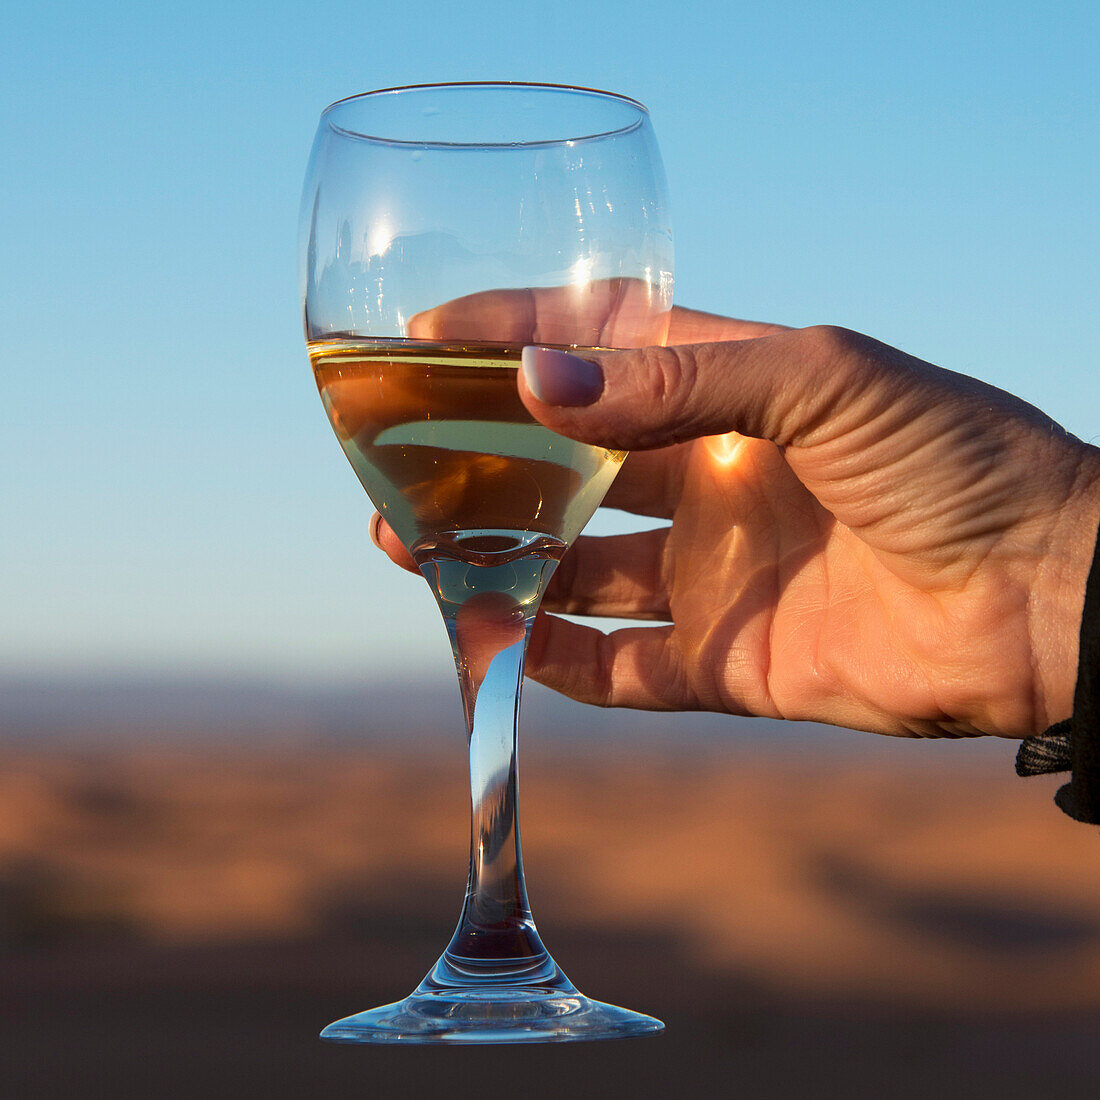 'A woman's hand holding a glass of white wine;Souss-massa-draa morocco'